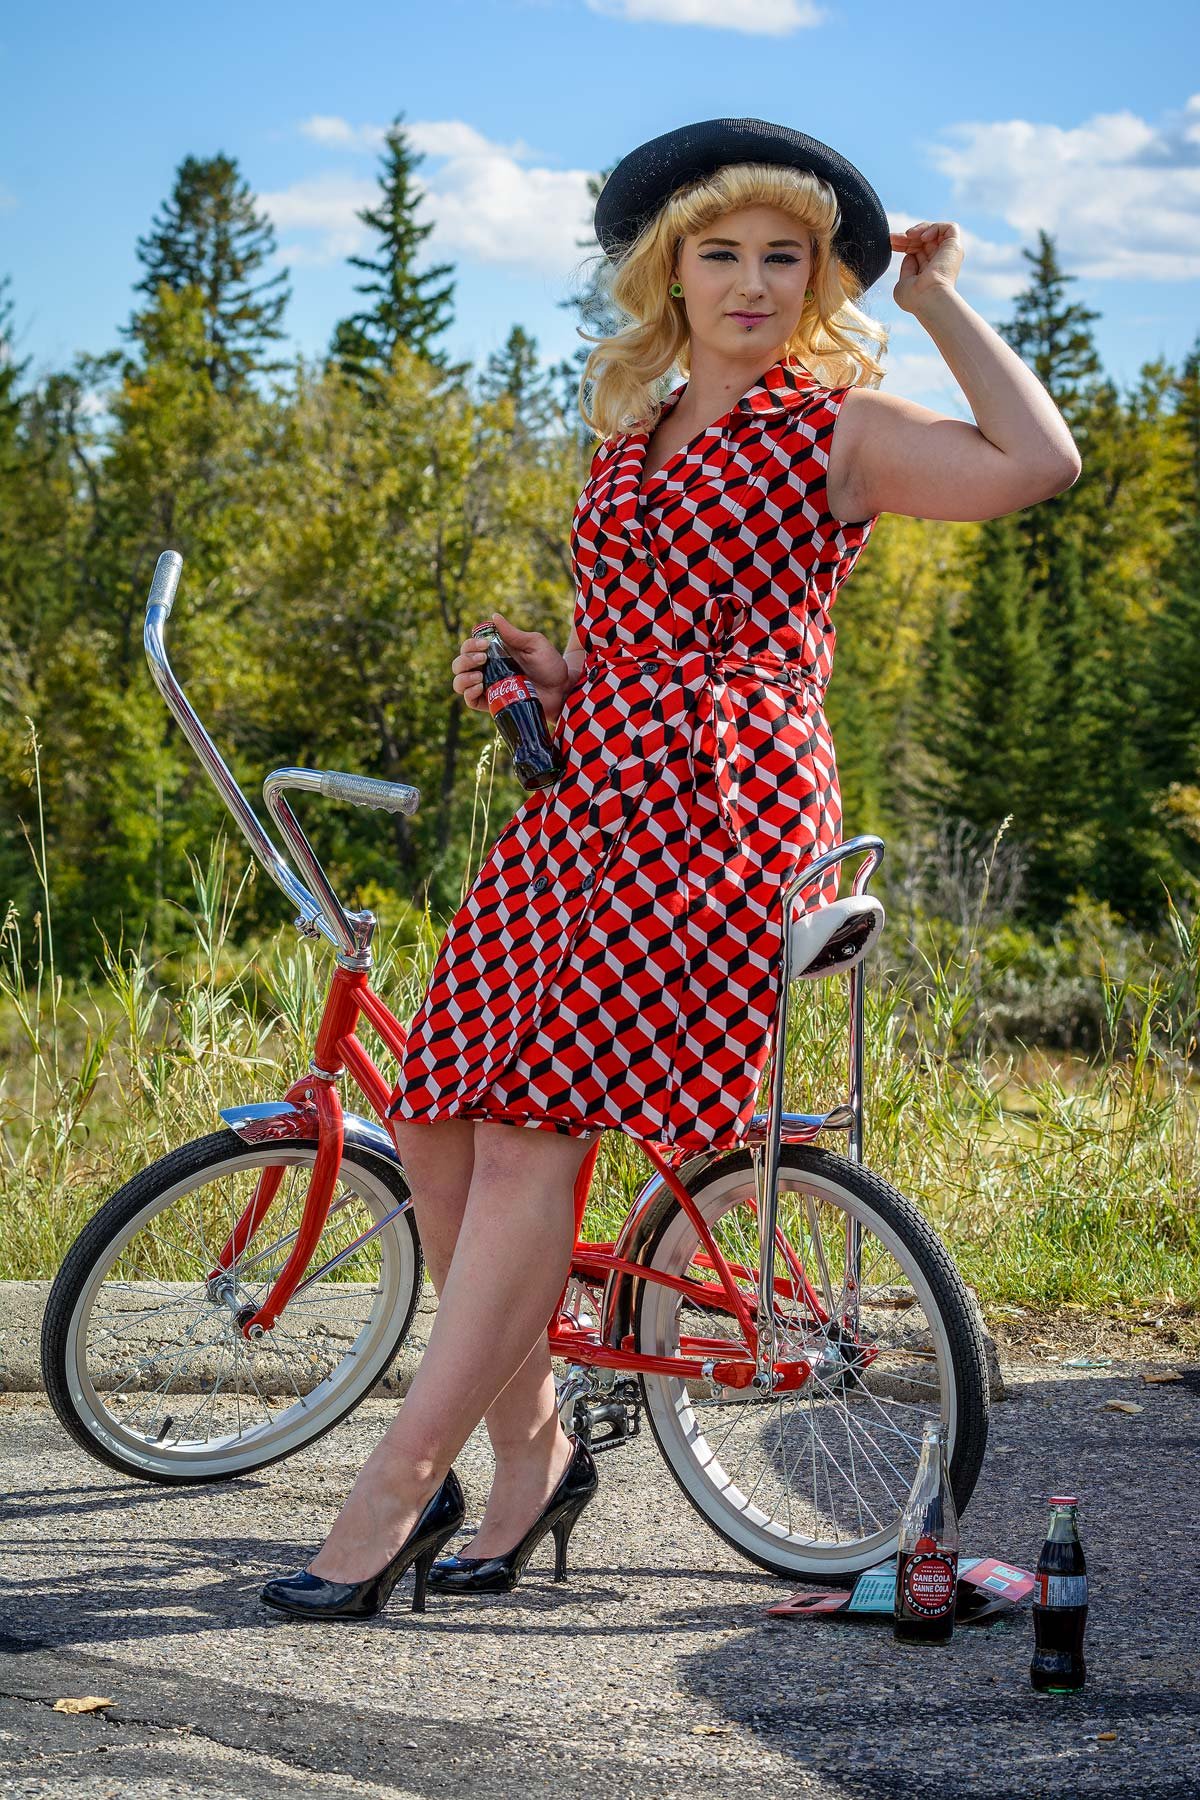 Pinup-Girl-On-Bike.jpg